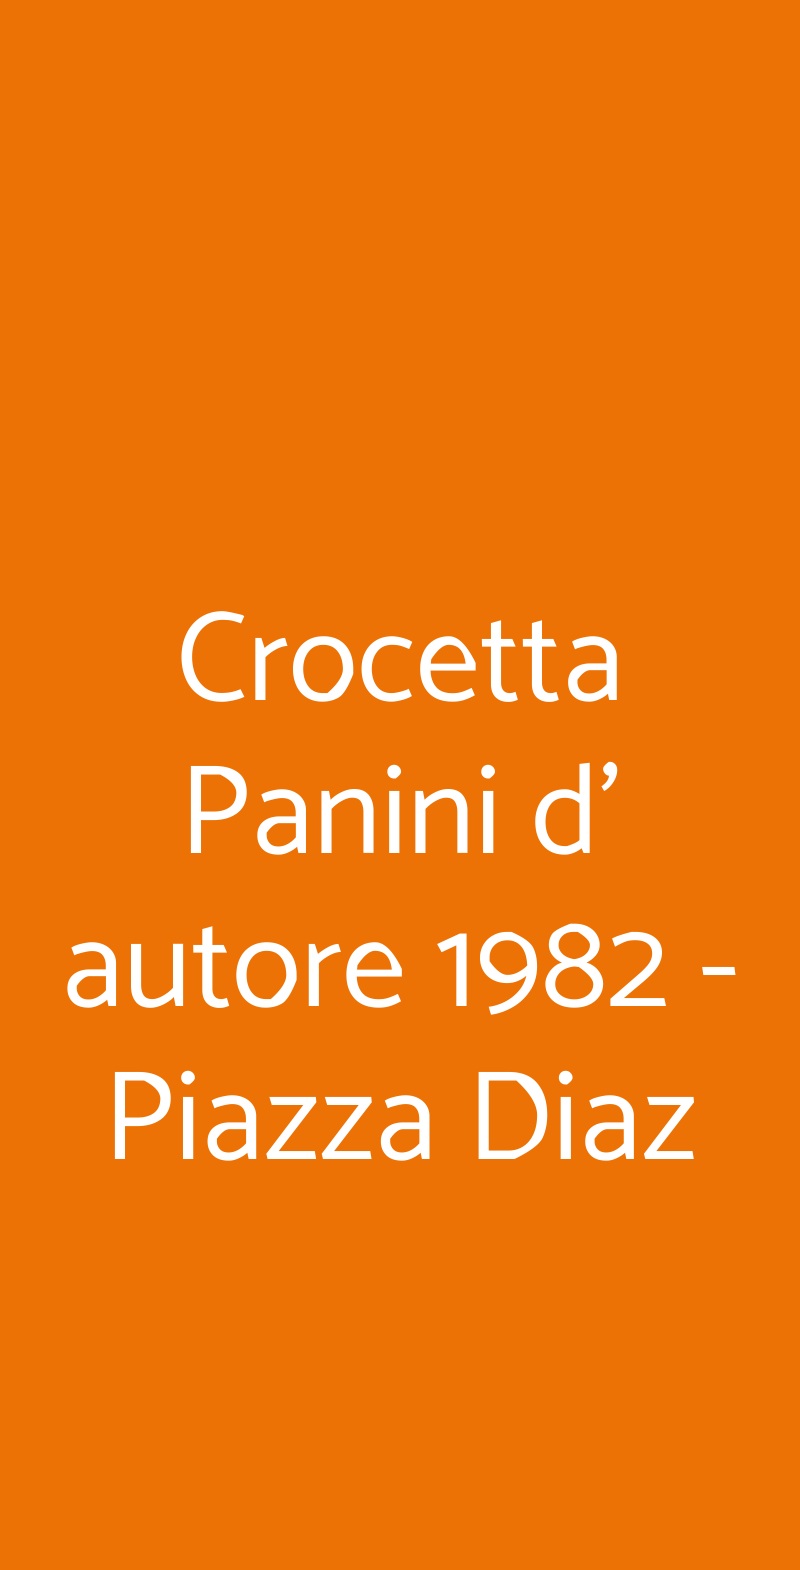 Crocetta Panini d' autore 1982 - Piazza Diaz Milano menù 1 pagina